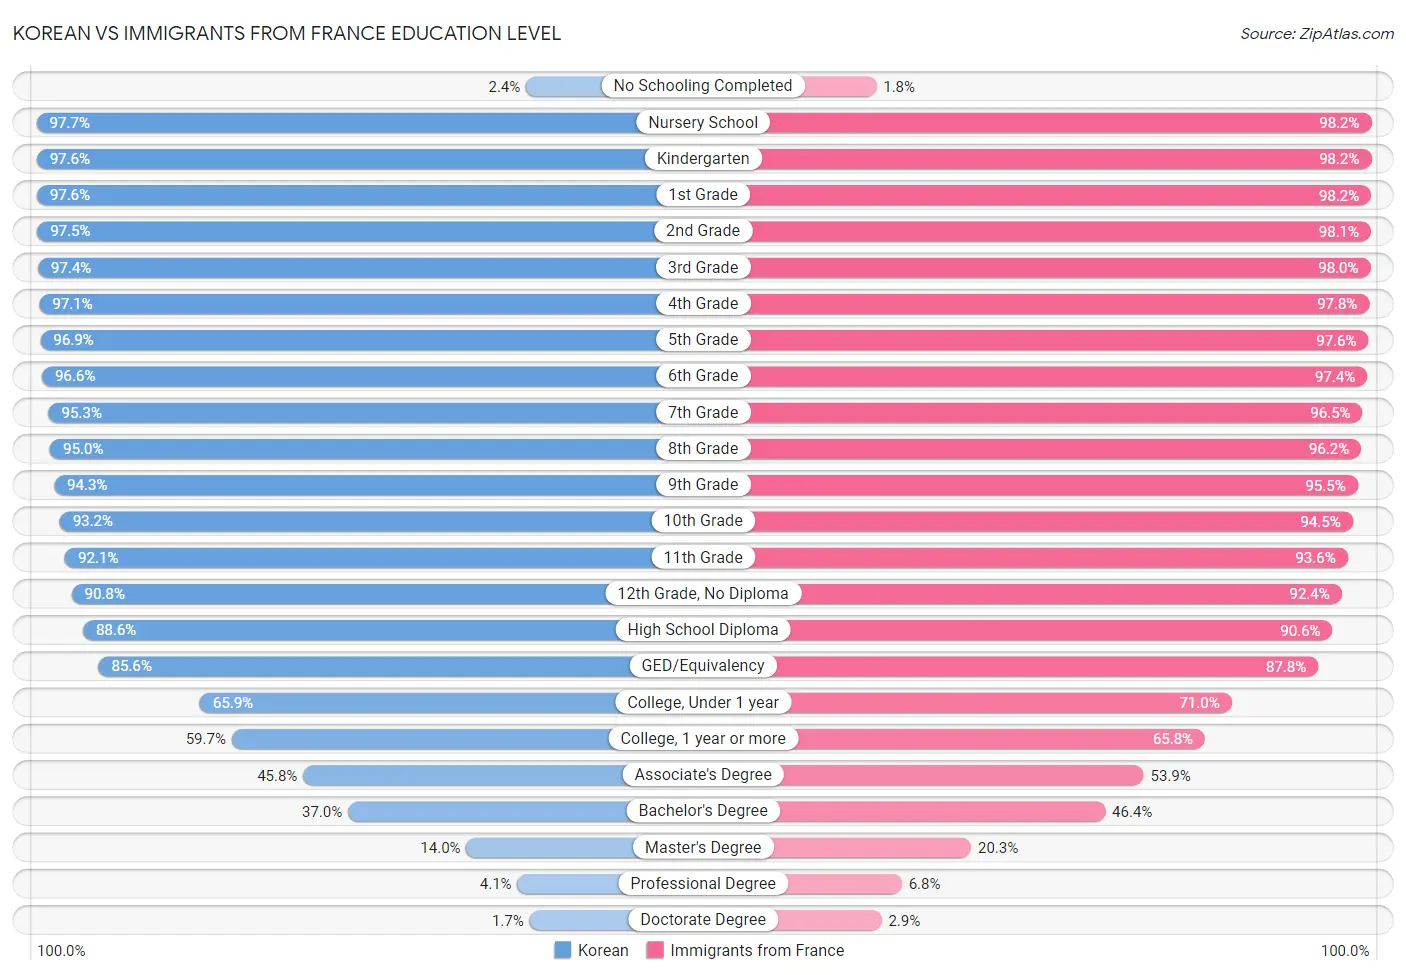 Korean vs Immigrants from France Education Level